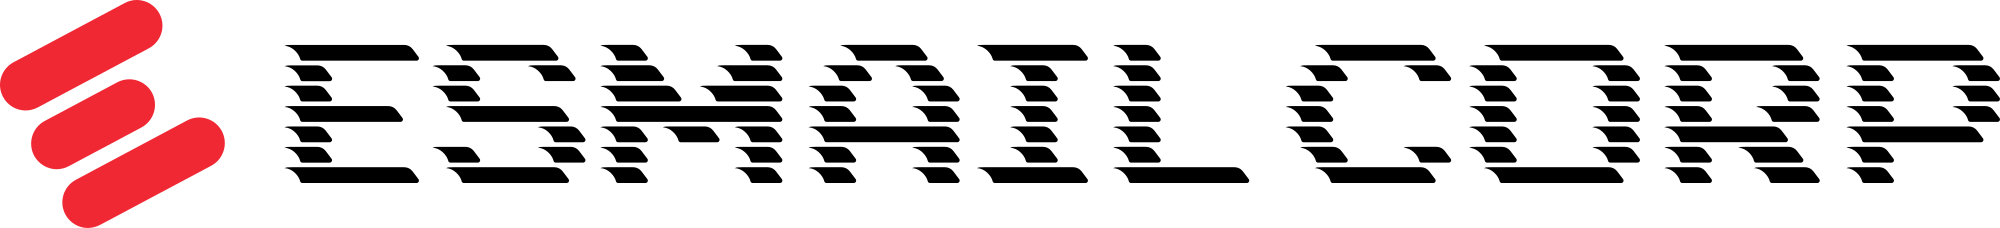 Esmail Corp Logo